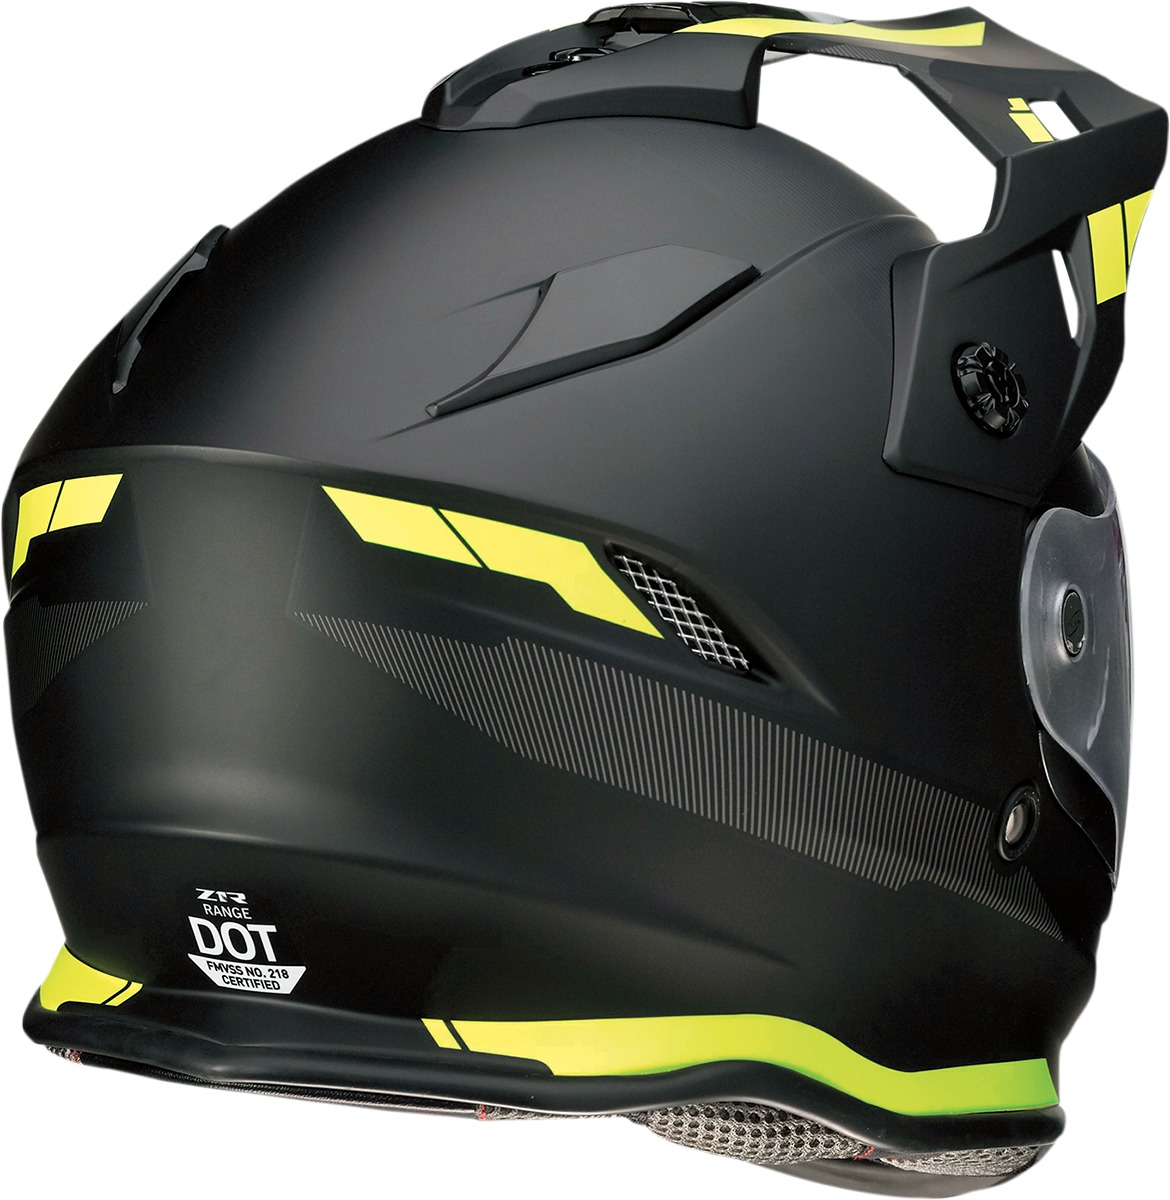 Range Dual Sport Helmet Large - Uptake Black/Hi-Viz - Click Image to Close